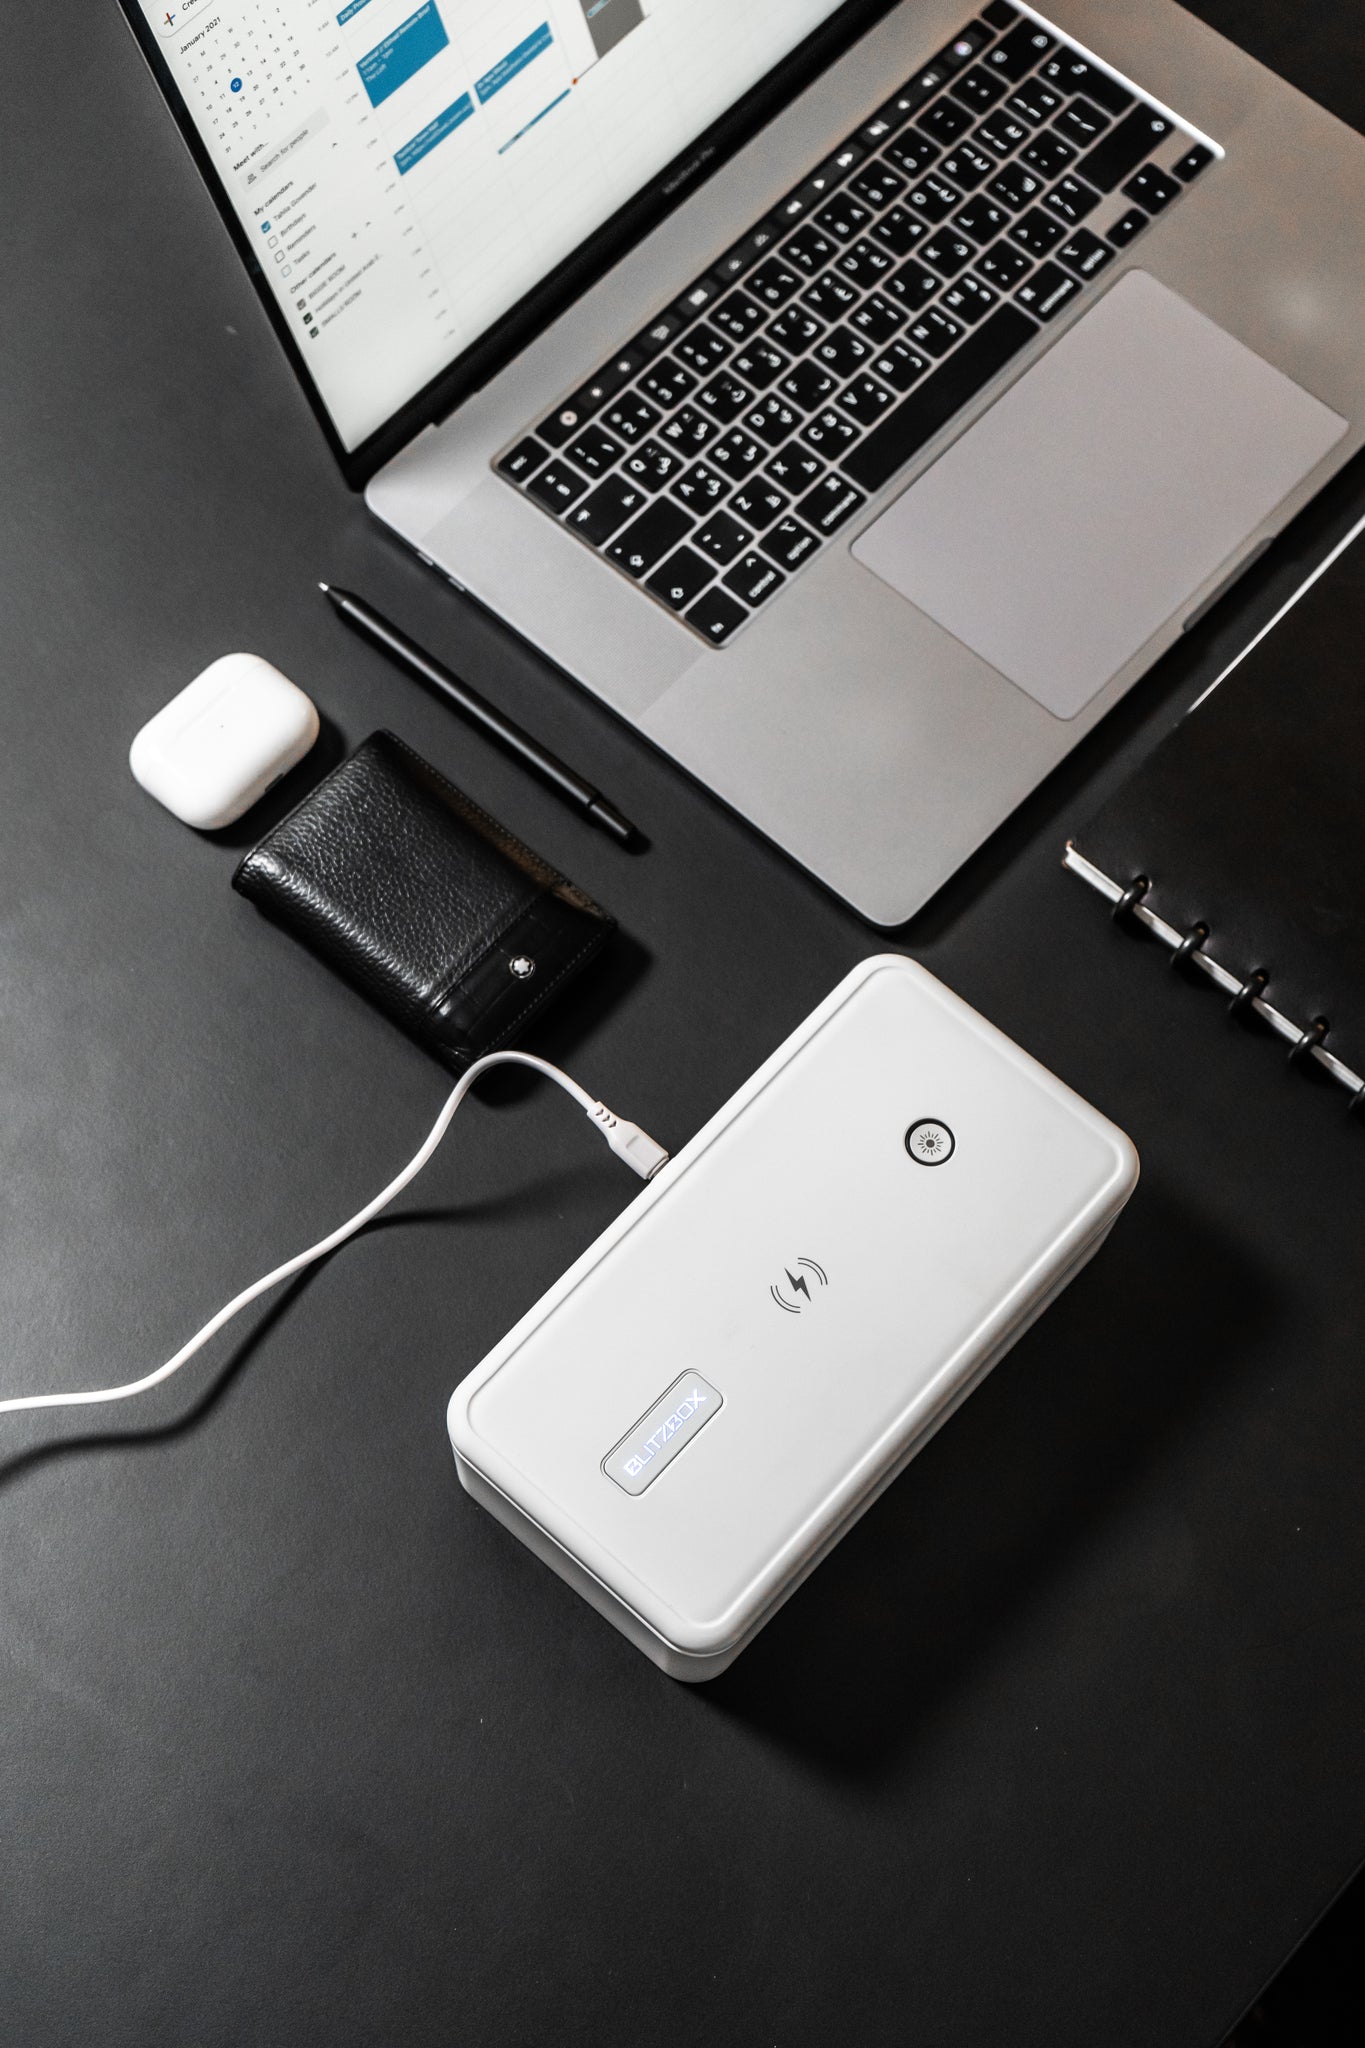 BlitzBox Pro 8 UV Phone Sterilizer on desk with Macbook and accessories